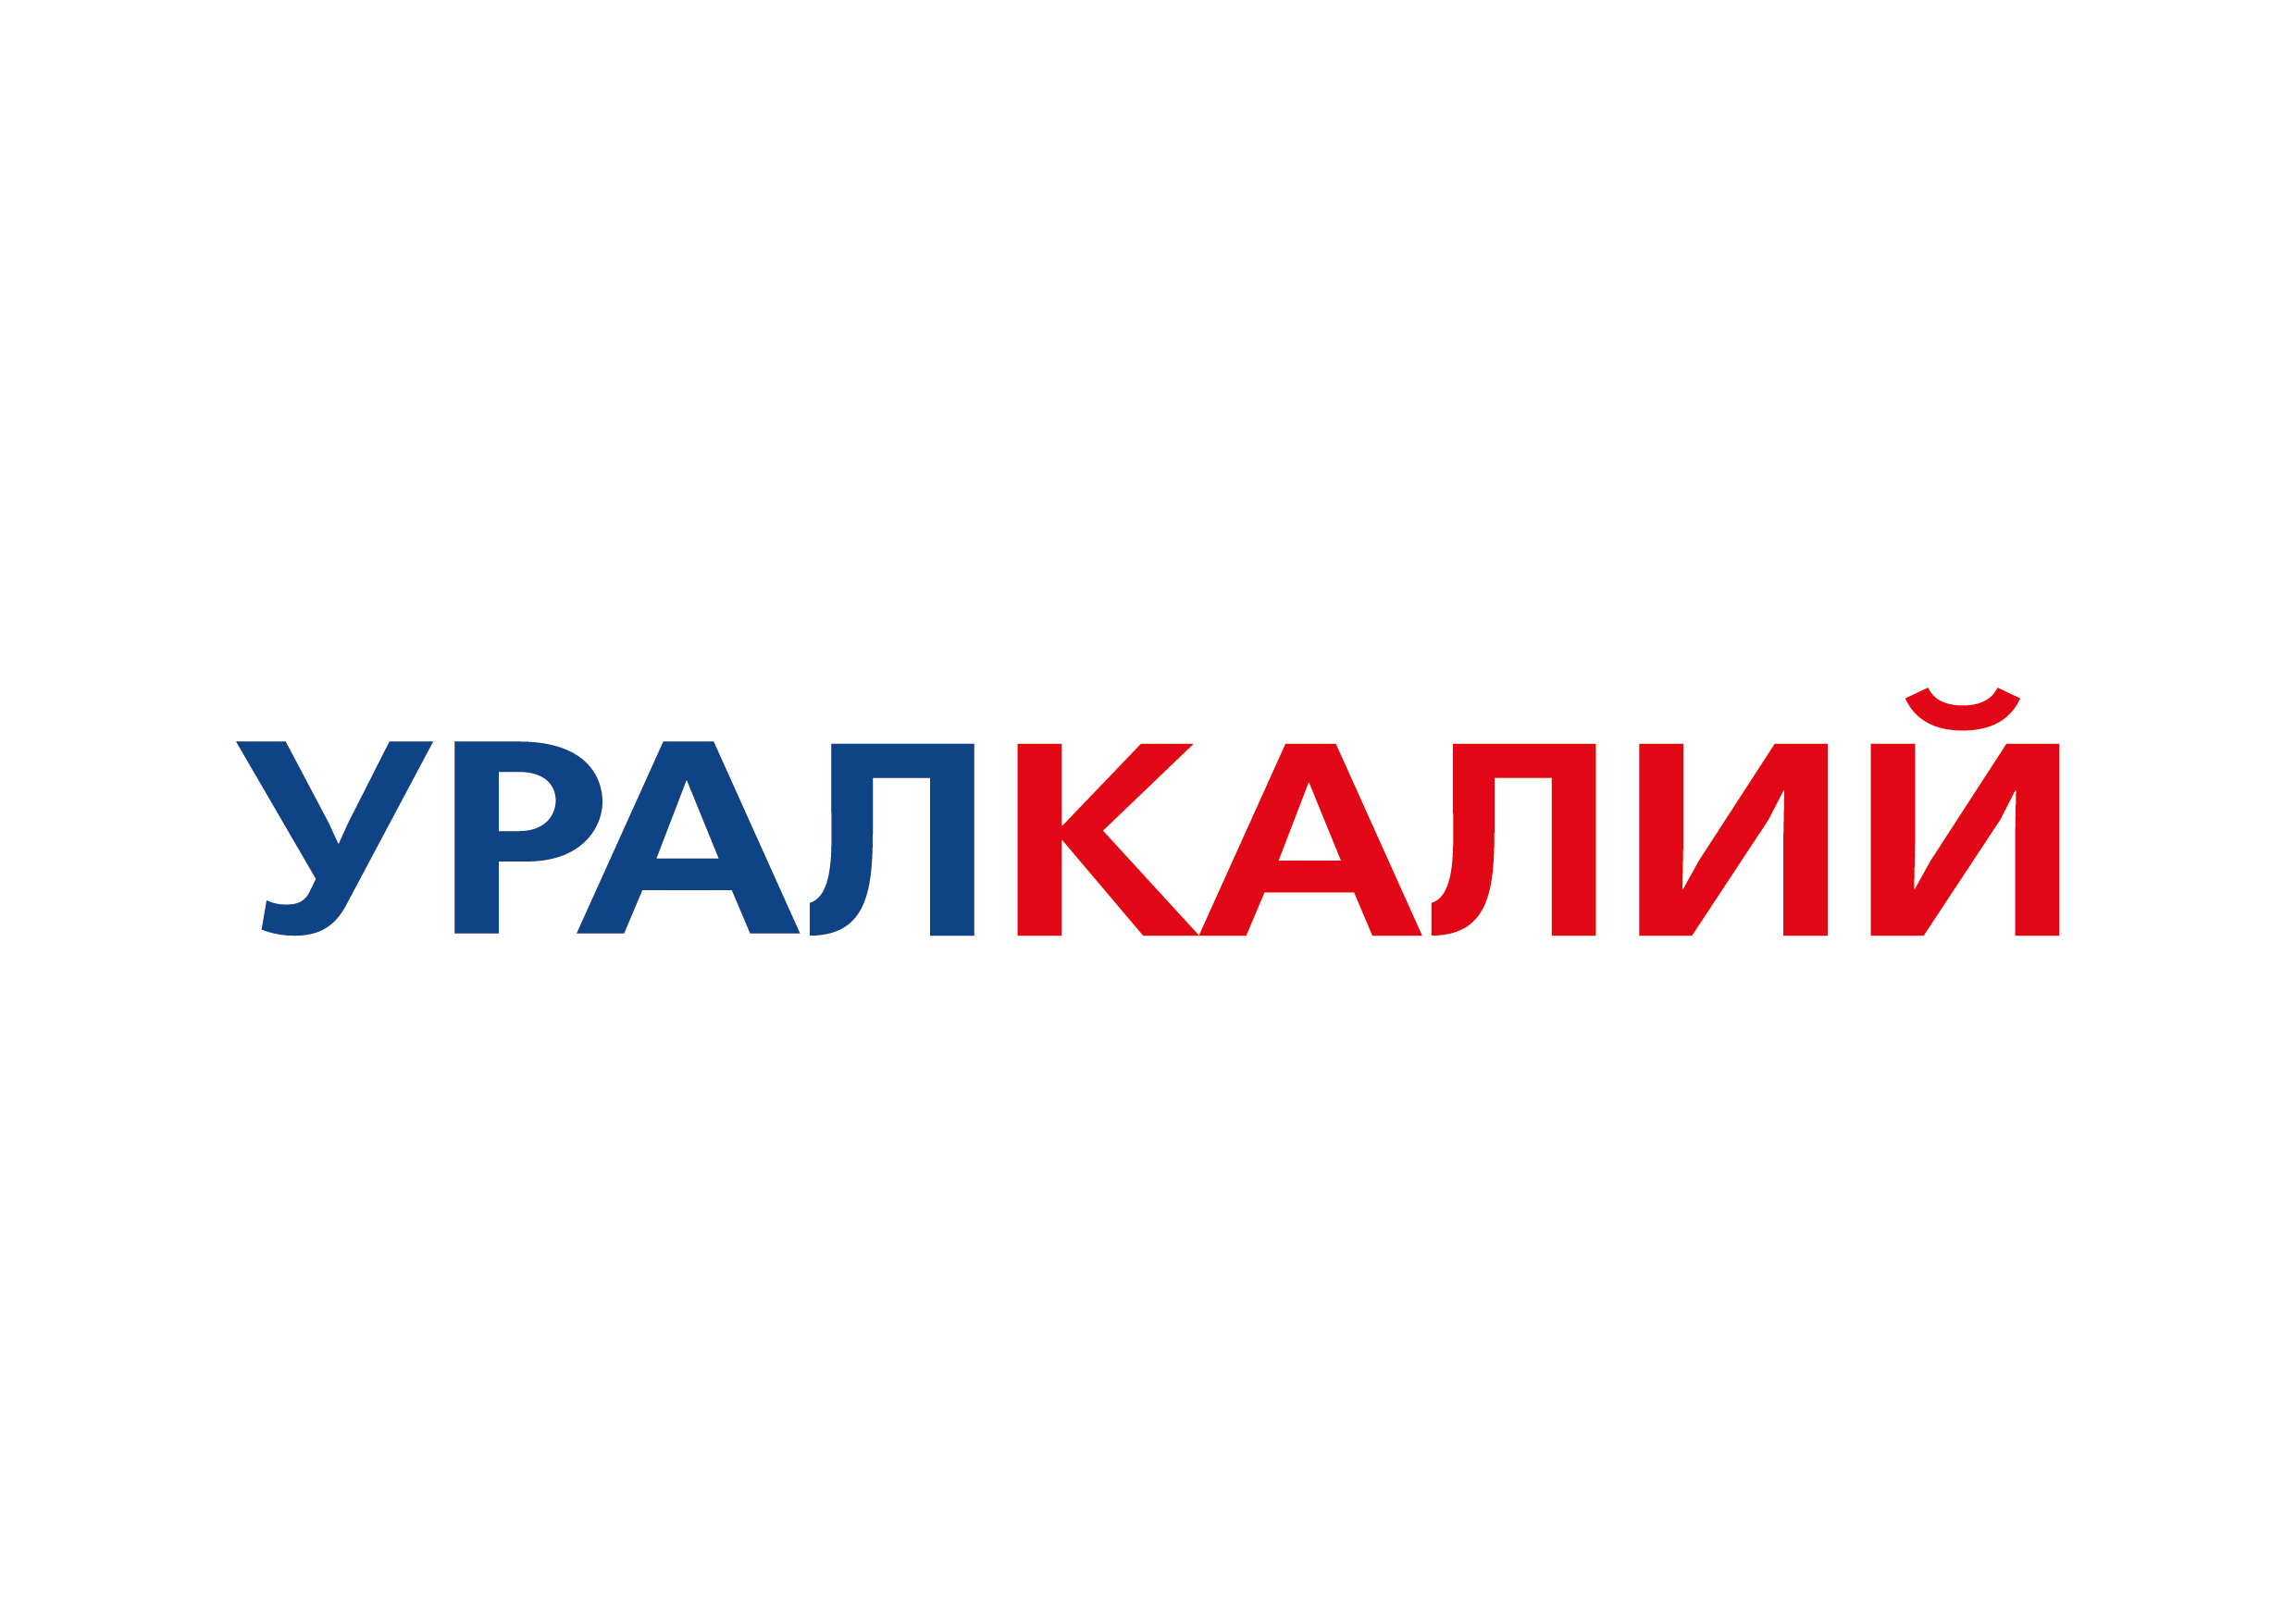 Логотип "Уралкалия".jpg